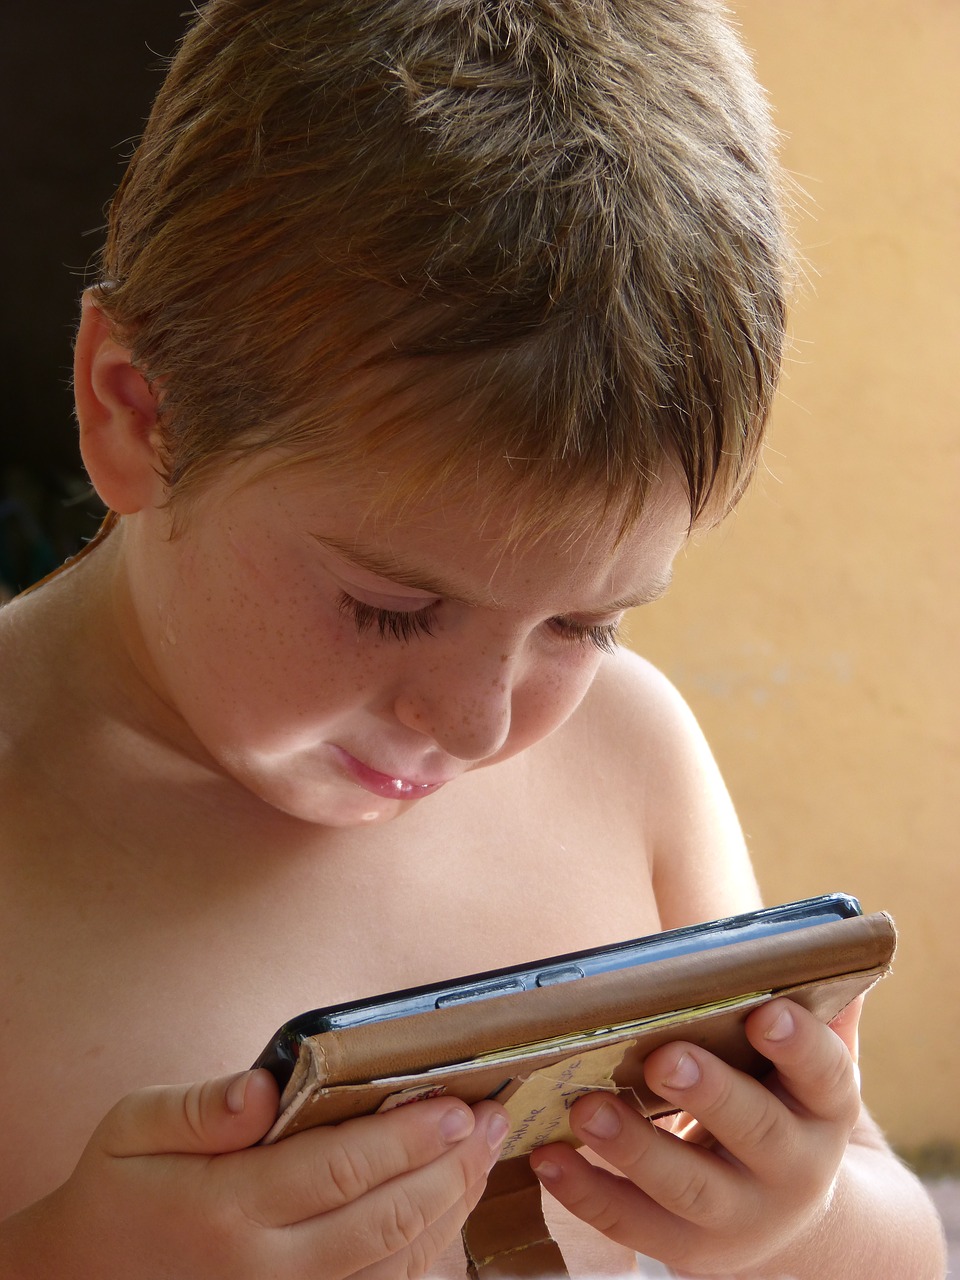 child cellular smarthpone free photo